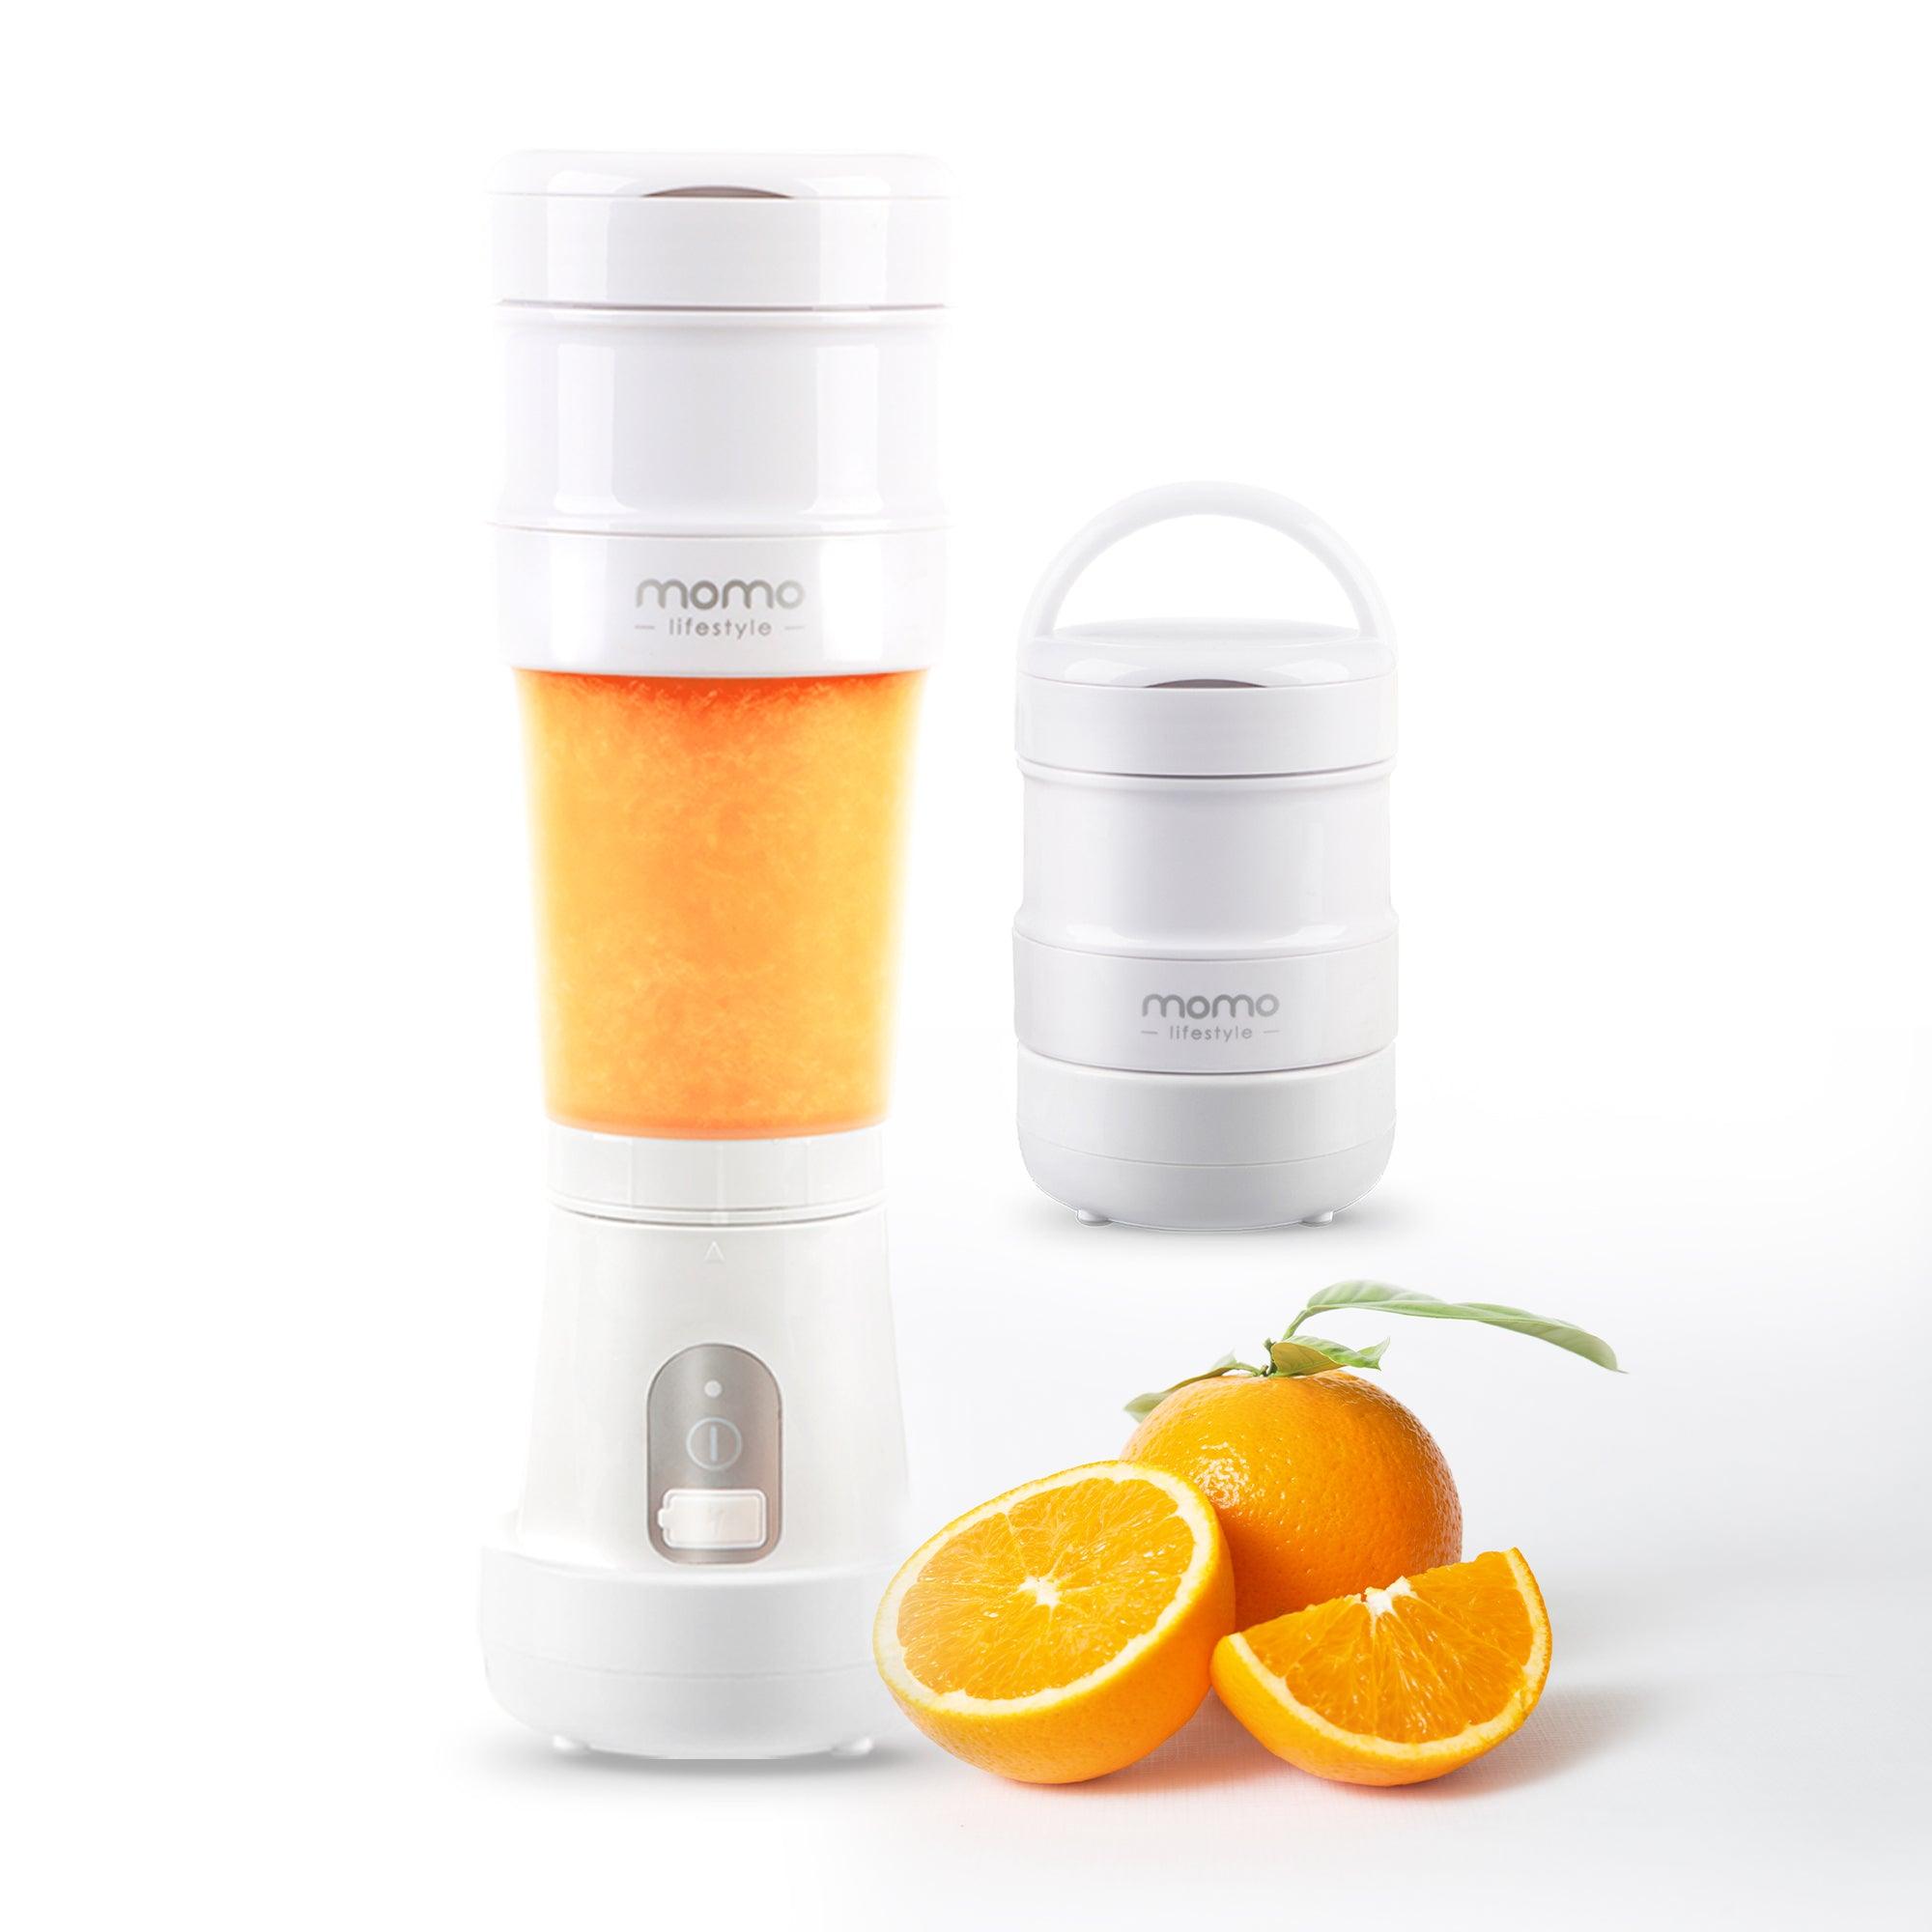 Mini Blender Portable Personal Blender USB Rechargeable Smoothie Blender  For Shakes Smoothies, 400ml Household Mixer Blender For Fruit Juicer Orange  Vegetable Carrots Juicer,3 Colors 